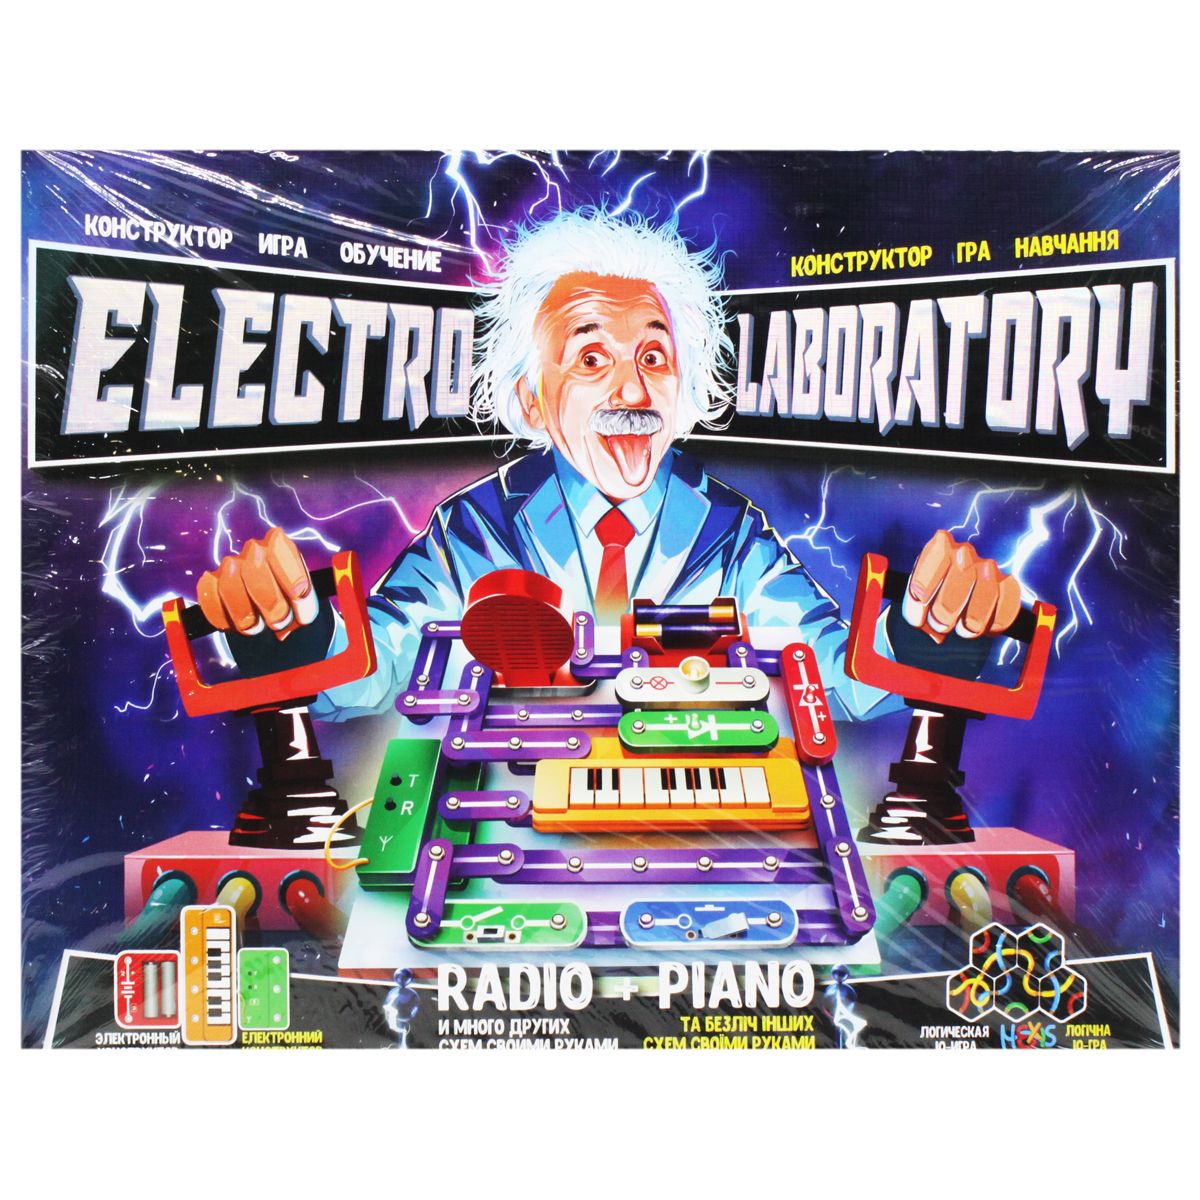 Электронный конструктор "Electro Laboratory.  Radio+Piano"